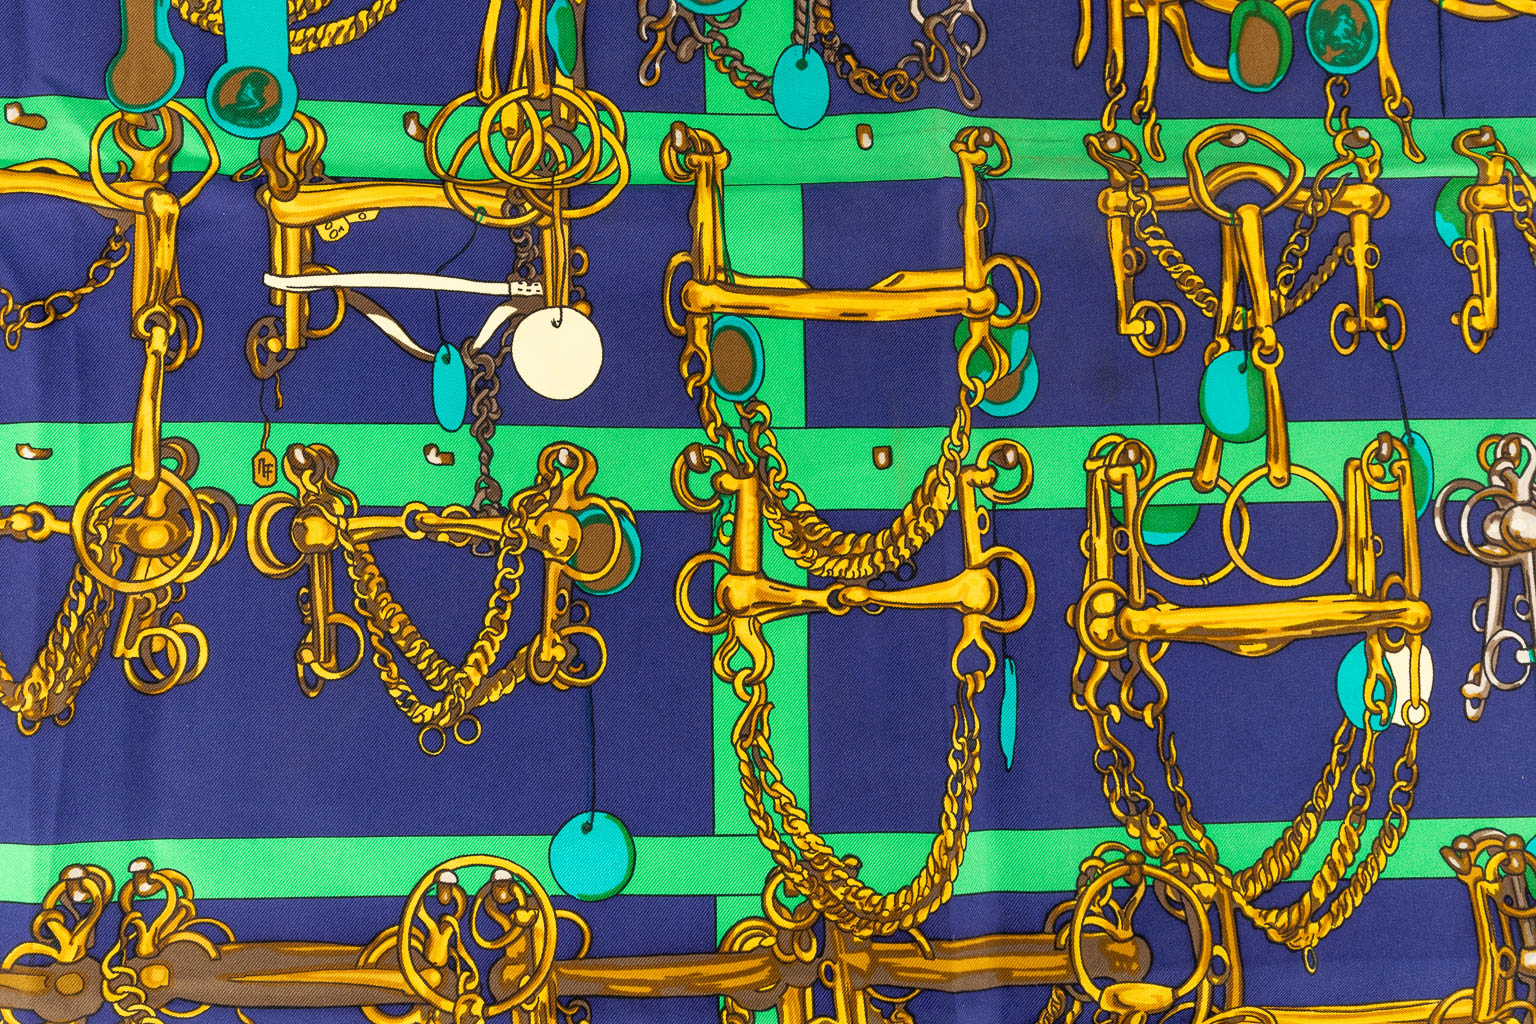 Hermès Paris, a set of 2 silk scarfs. (W:90 x H:90 cm)